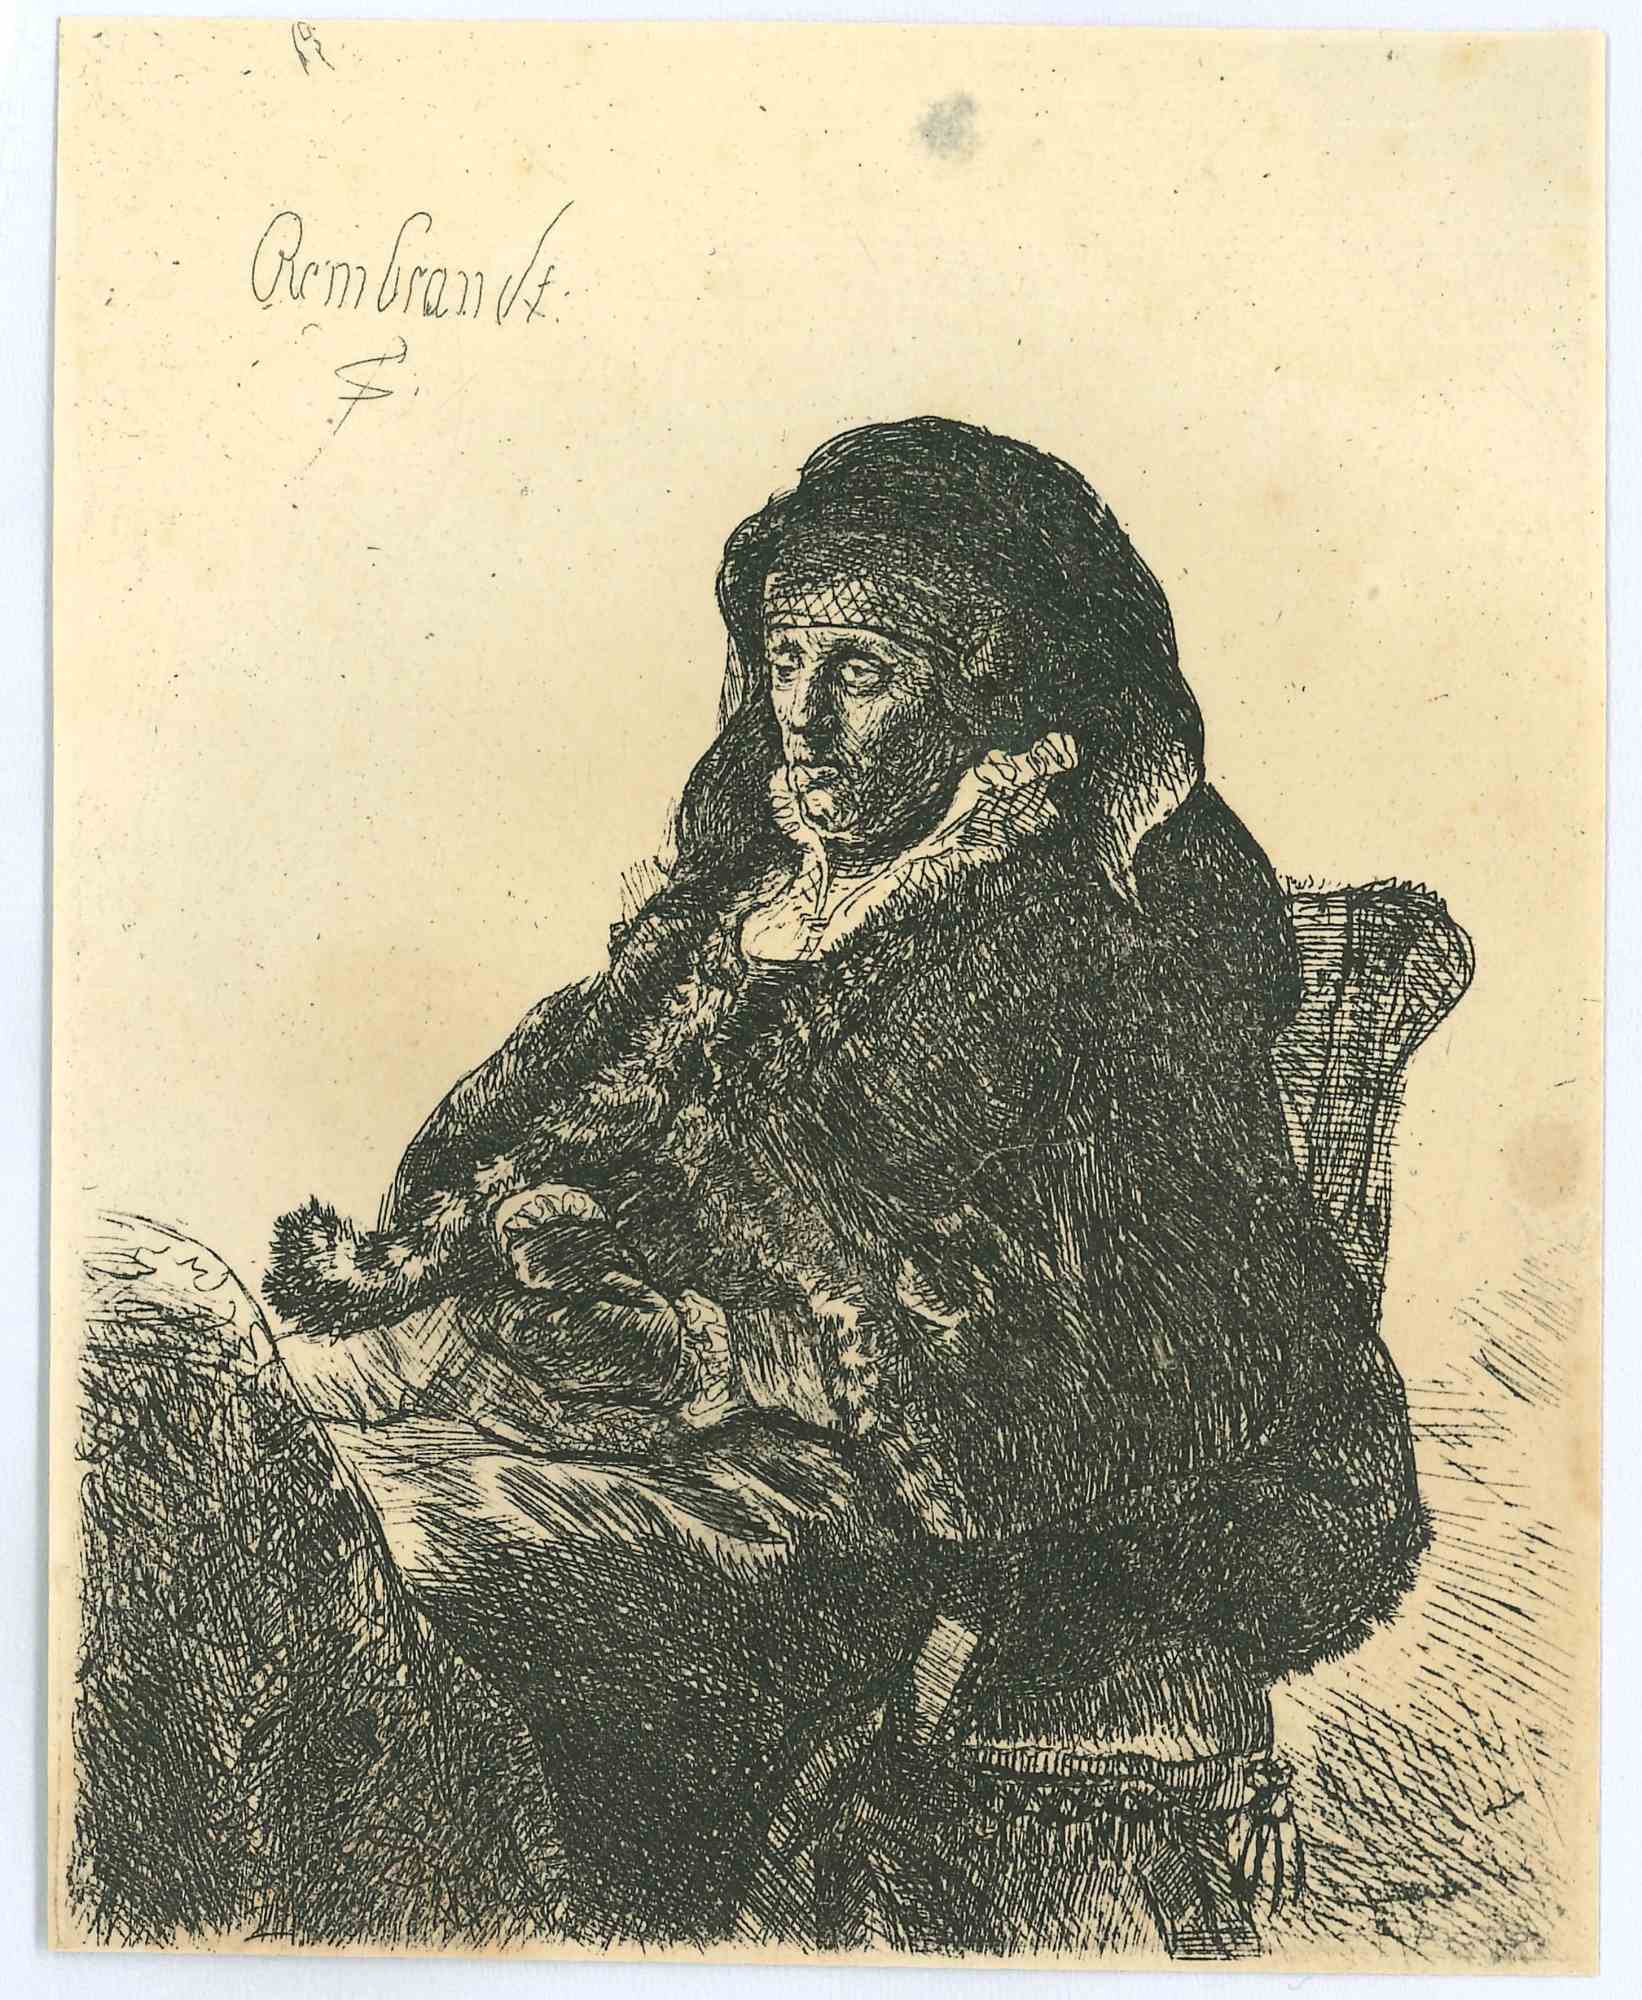 Portrait of Rembrandt's Mother